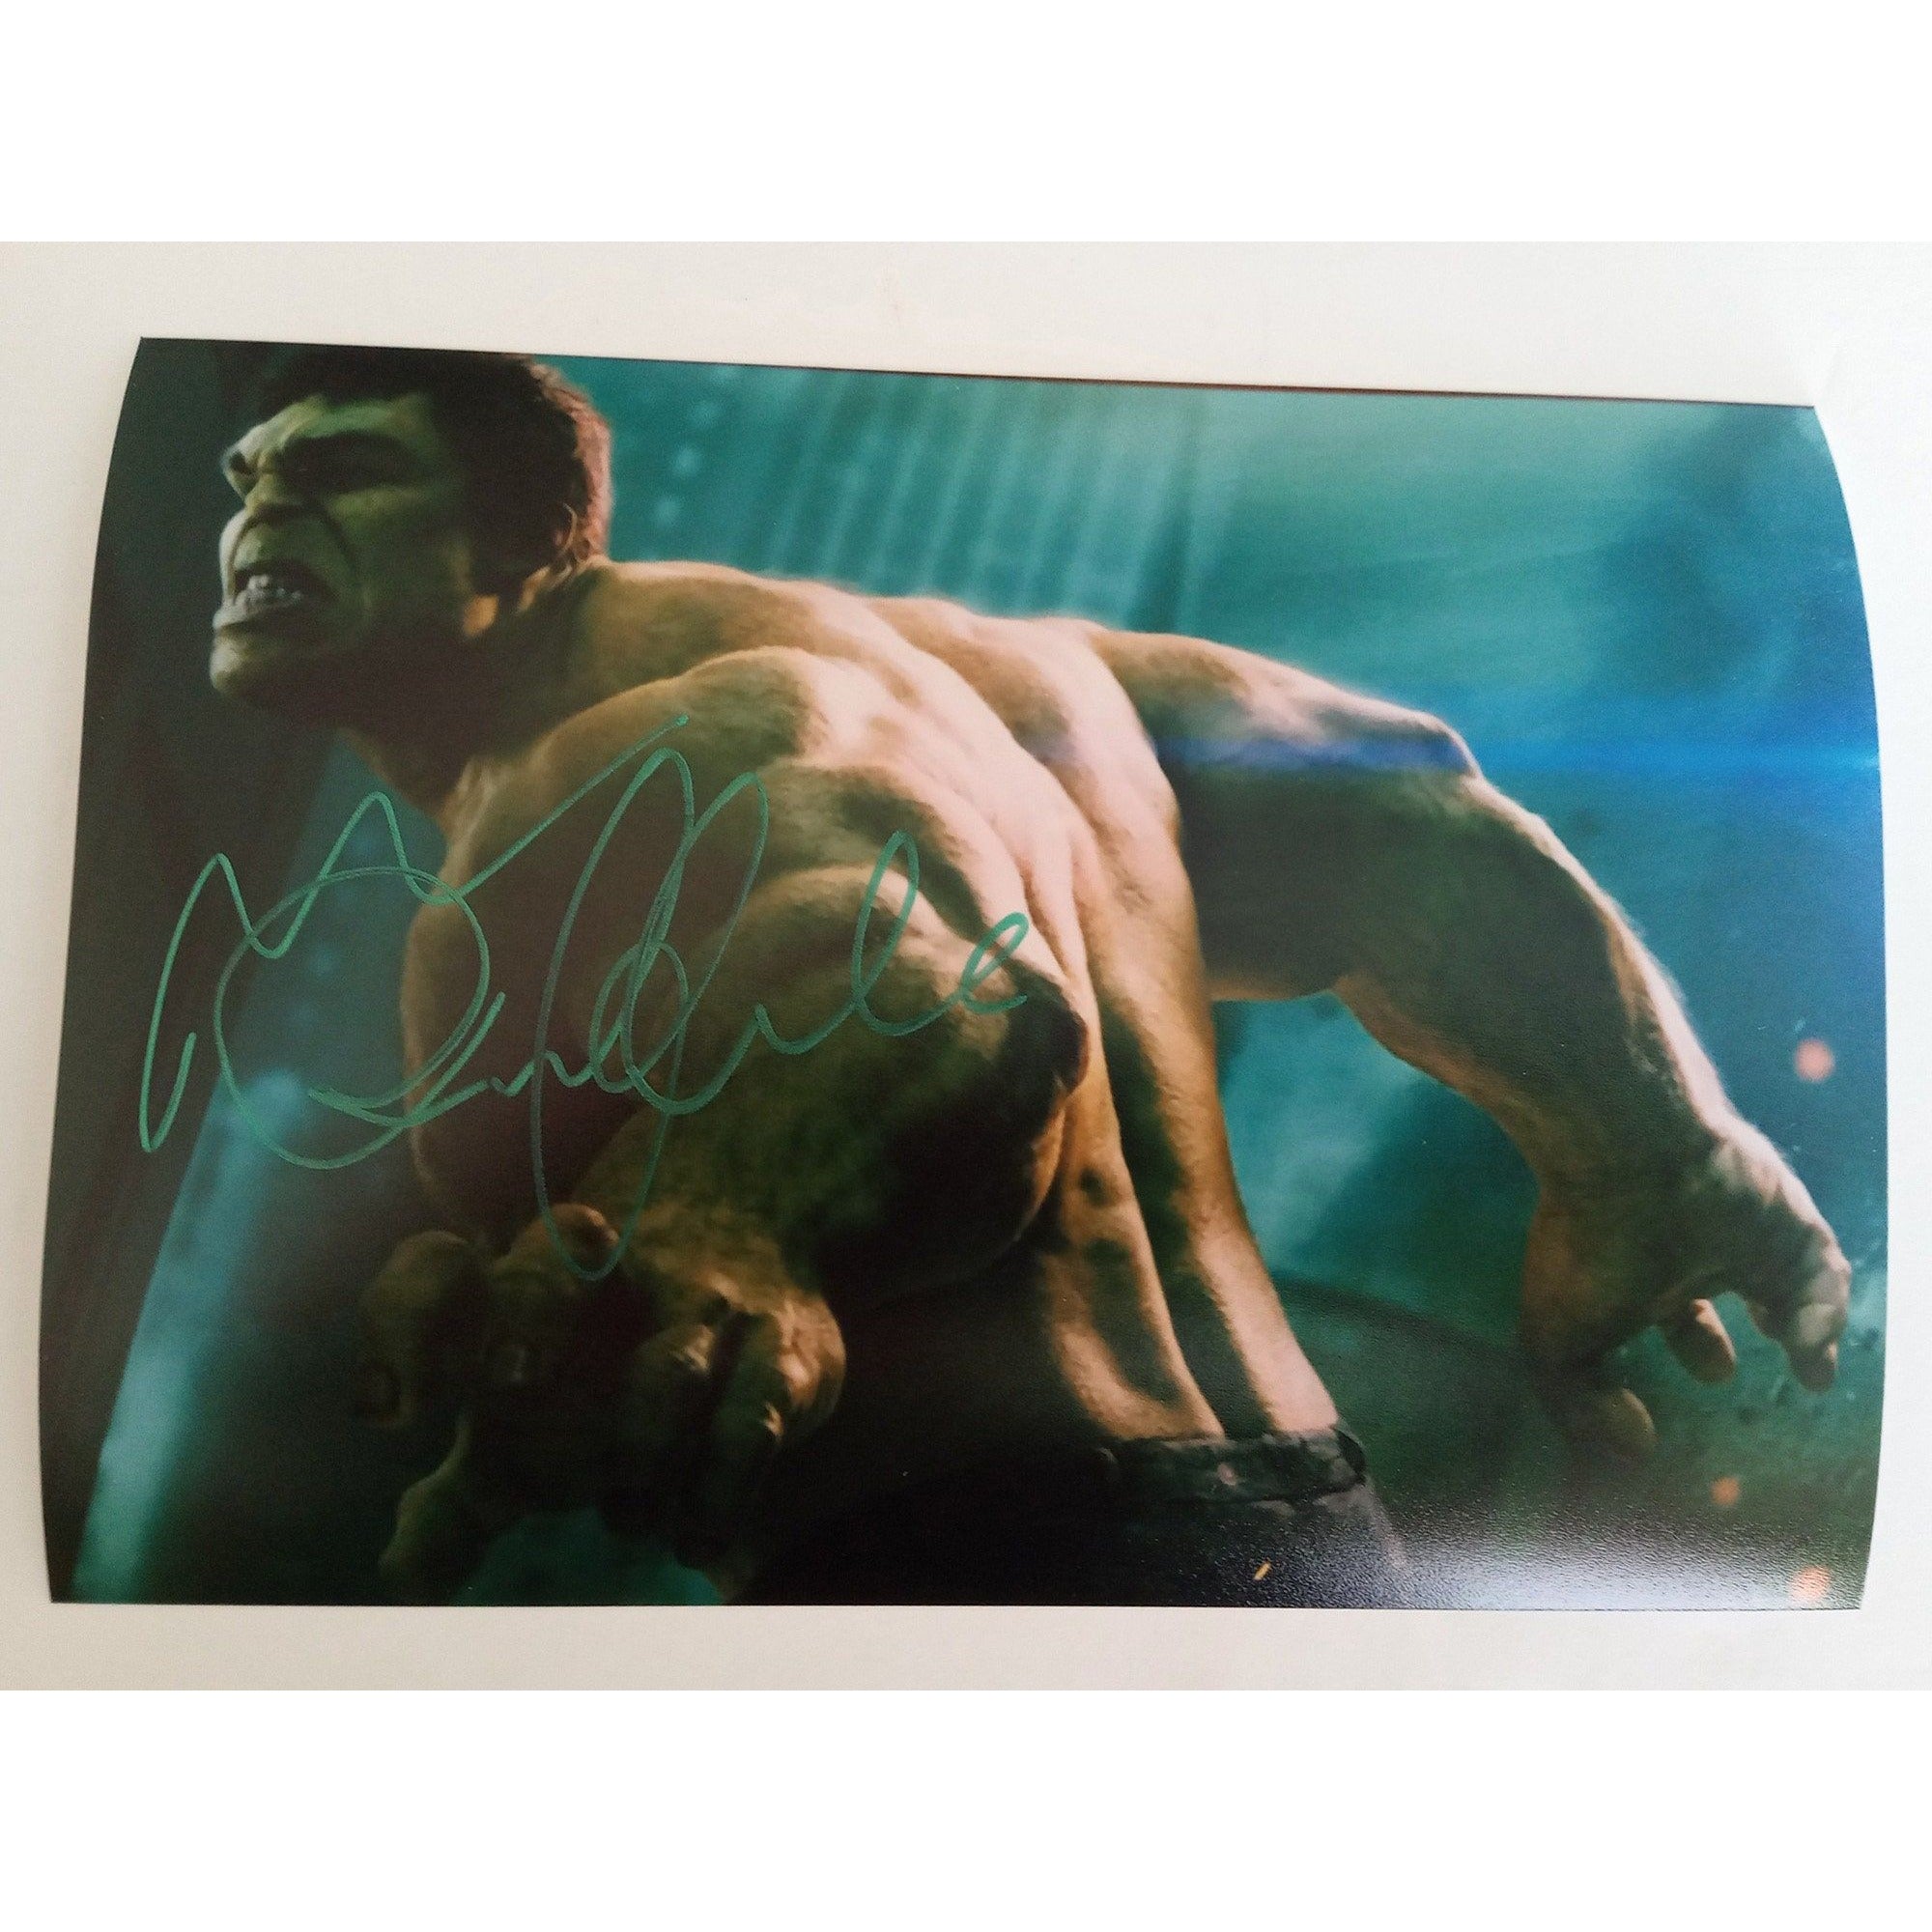 Mark Ruffalo Hulk  The Avengers 5x7 5 x 7 photo signed with proof